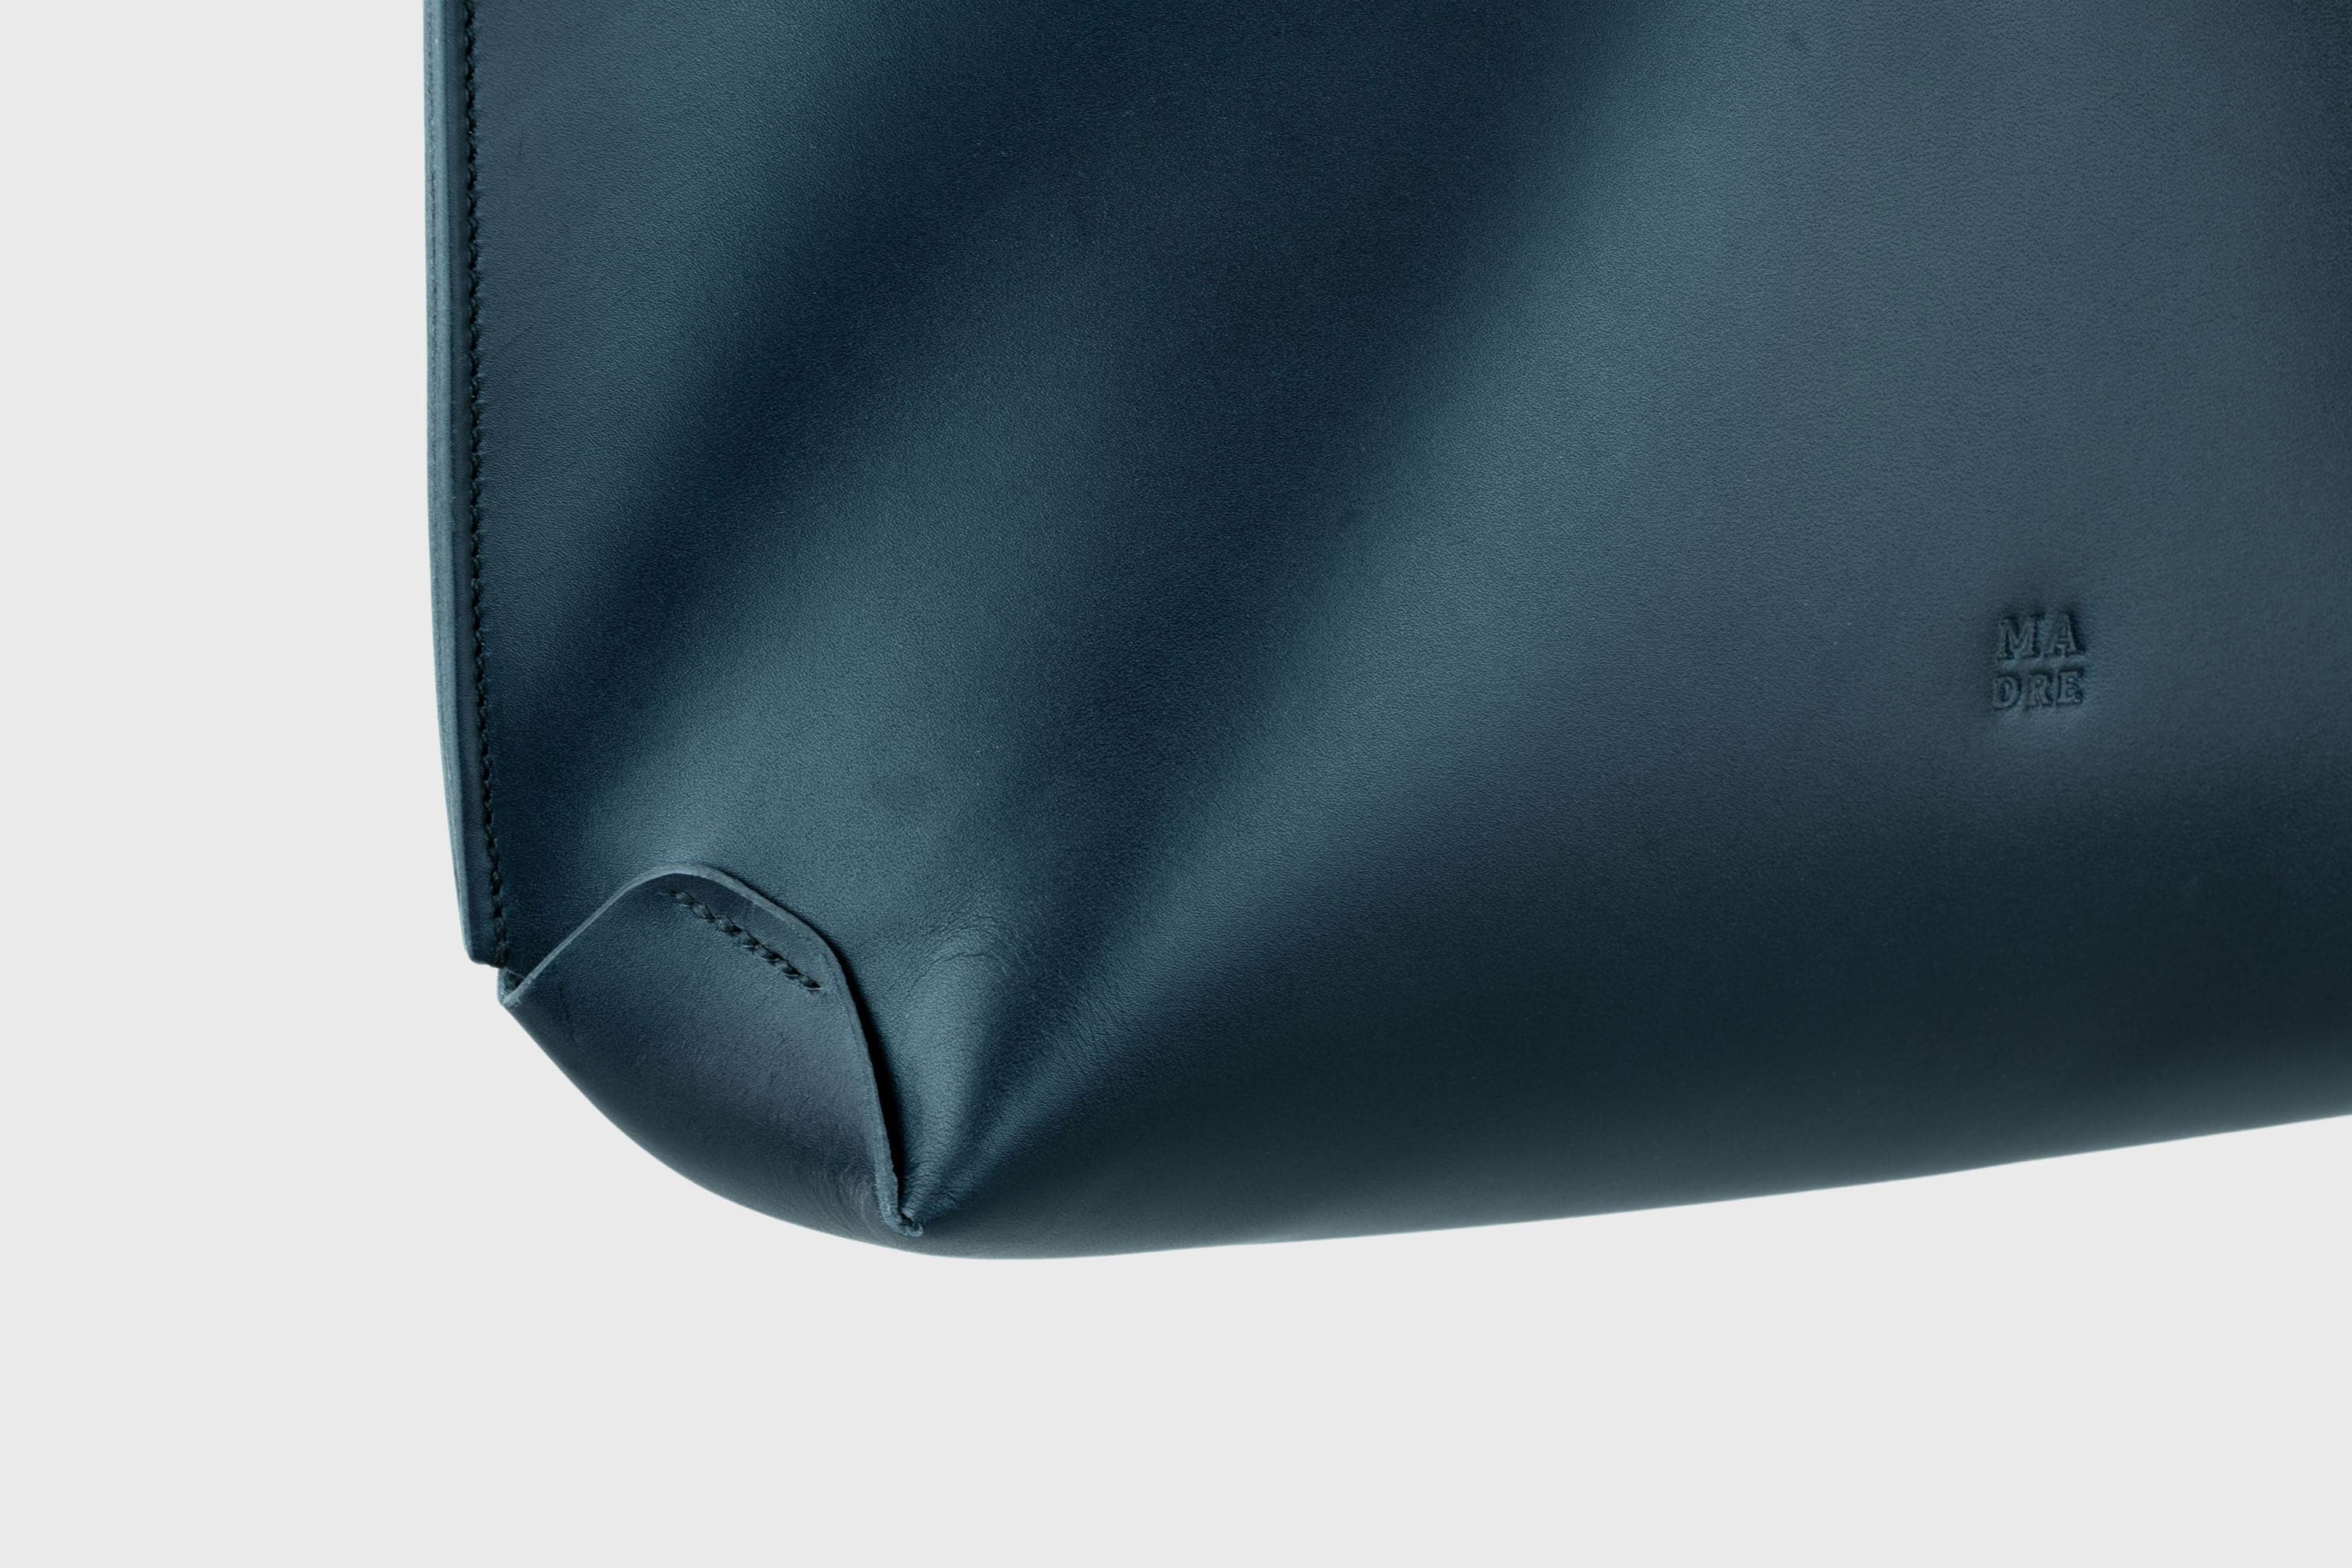 Saddlestitched Tote Bag Leather Marine Blue Detail Minimalistic Design By Manuel Dreesmann Atelier Madre Barcelona Spain